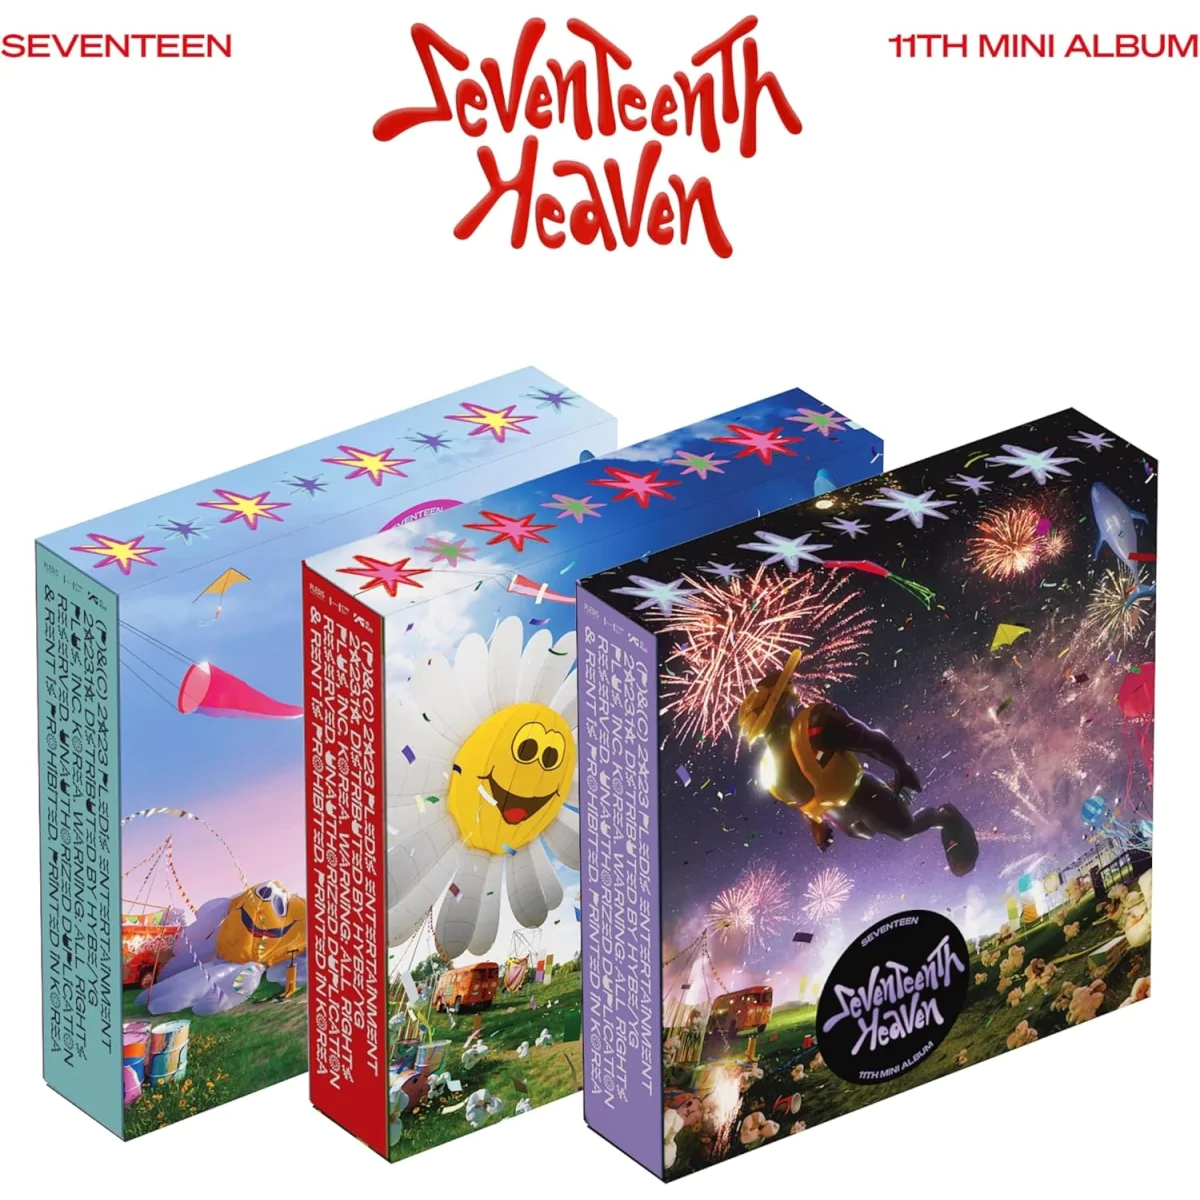 SEVENTEEN - SEVENTEENTH HEAVEN (PM 10:23 Version) (11th Mini Album) 